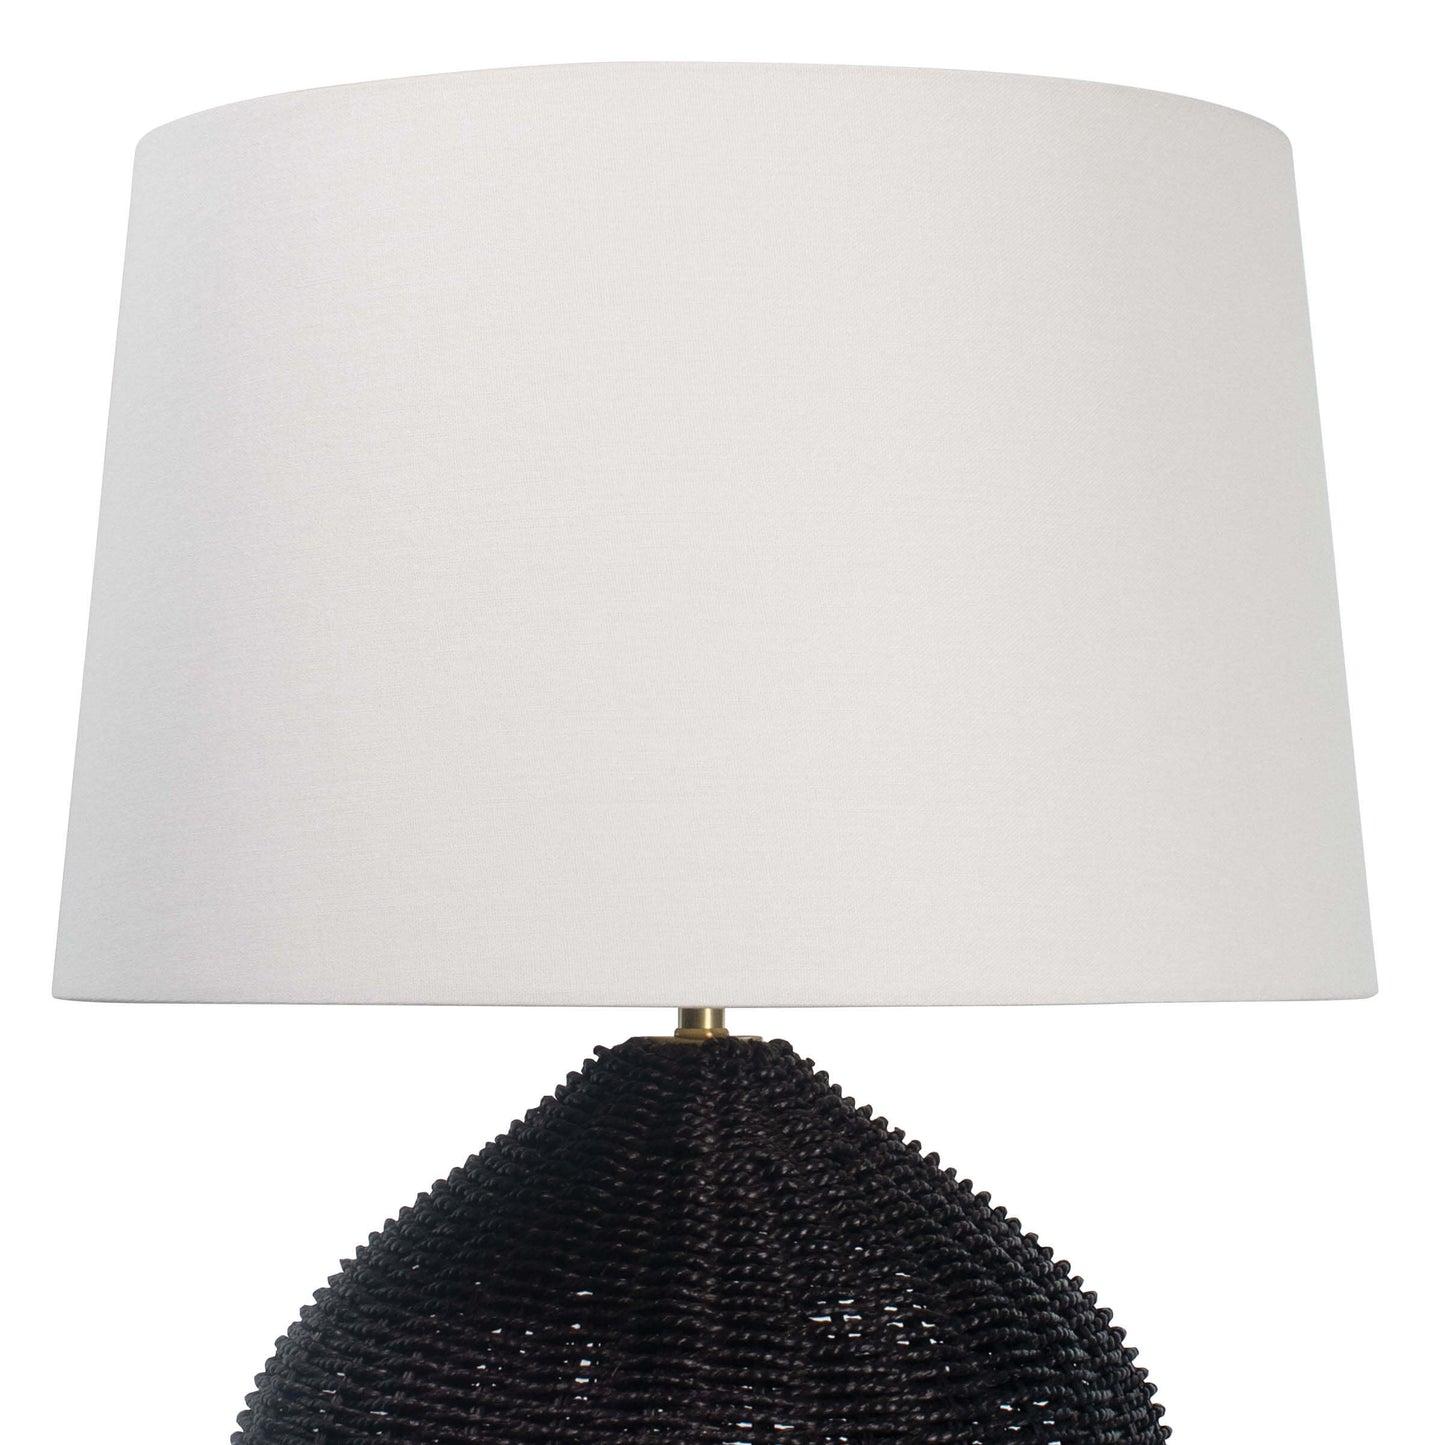 Georgian Table Lamp in Black by Coastal Living